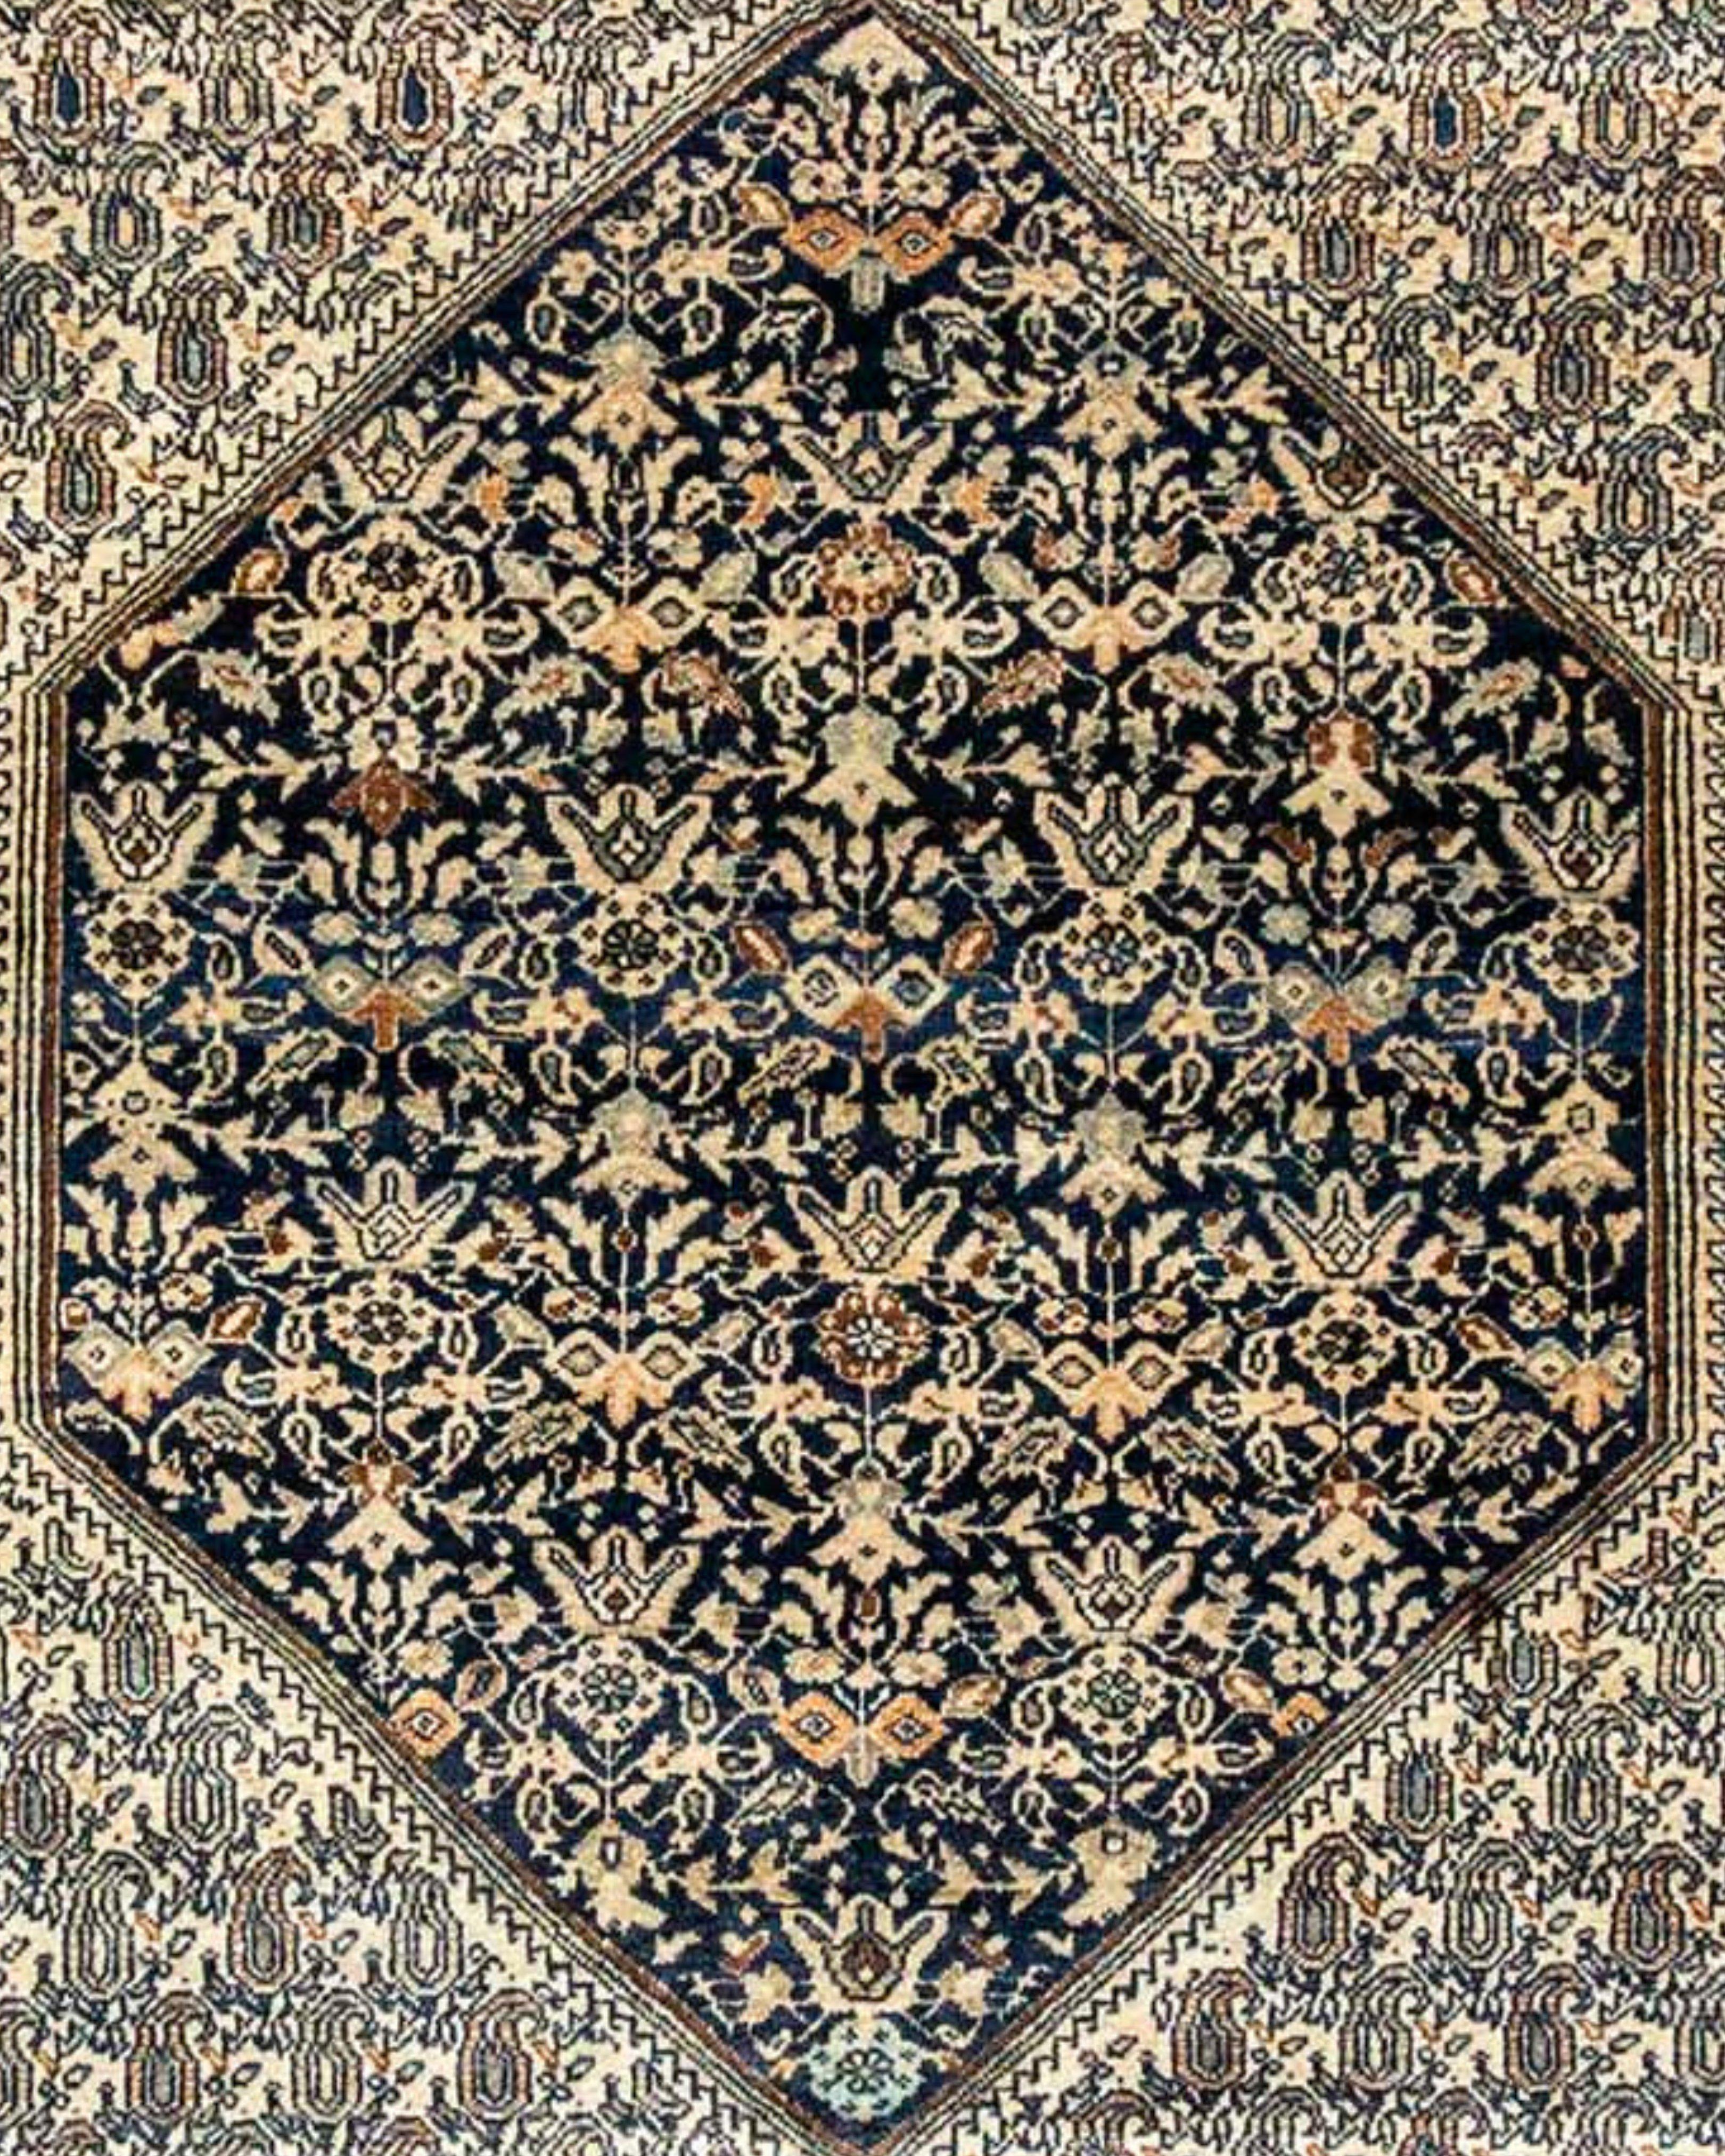 Ancien tapis persan Fereghan Sarouk, fin du 19e siècle

Informations supplémentaires :
Dimensions : 4'2